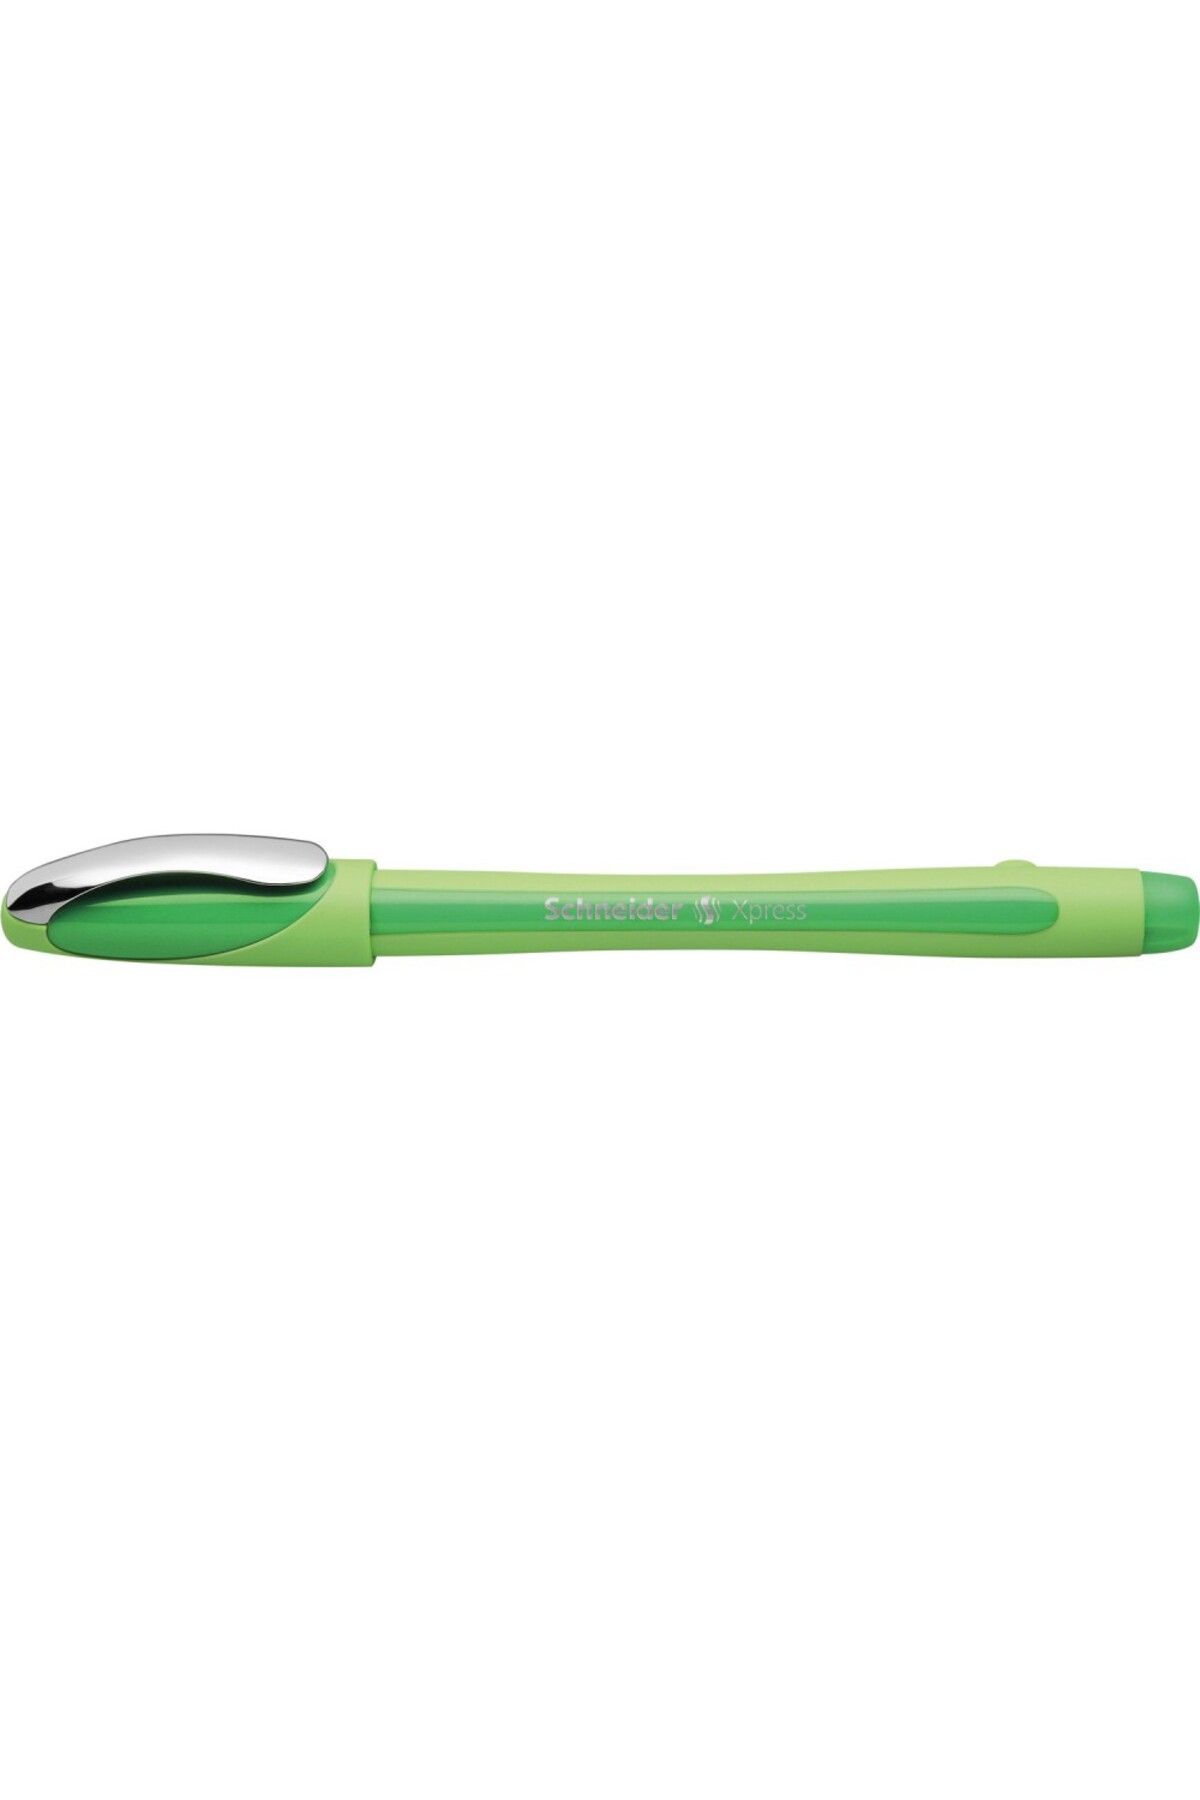 Genel Markalar Xpress Fiber Uçlu Kalem Yeşil 0.8 Mm 190004